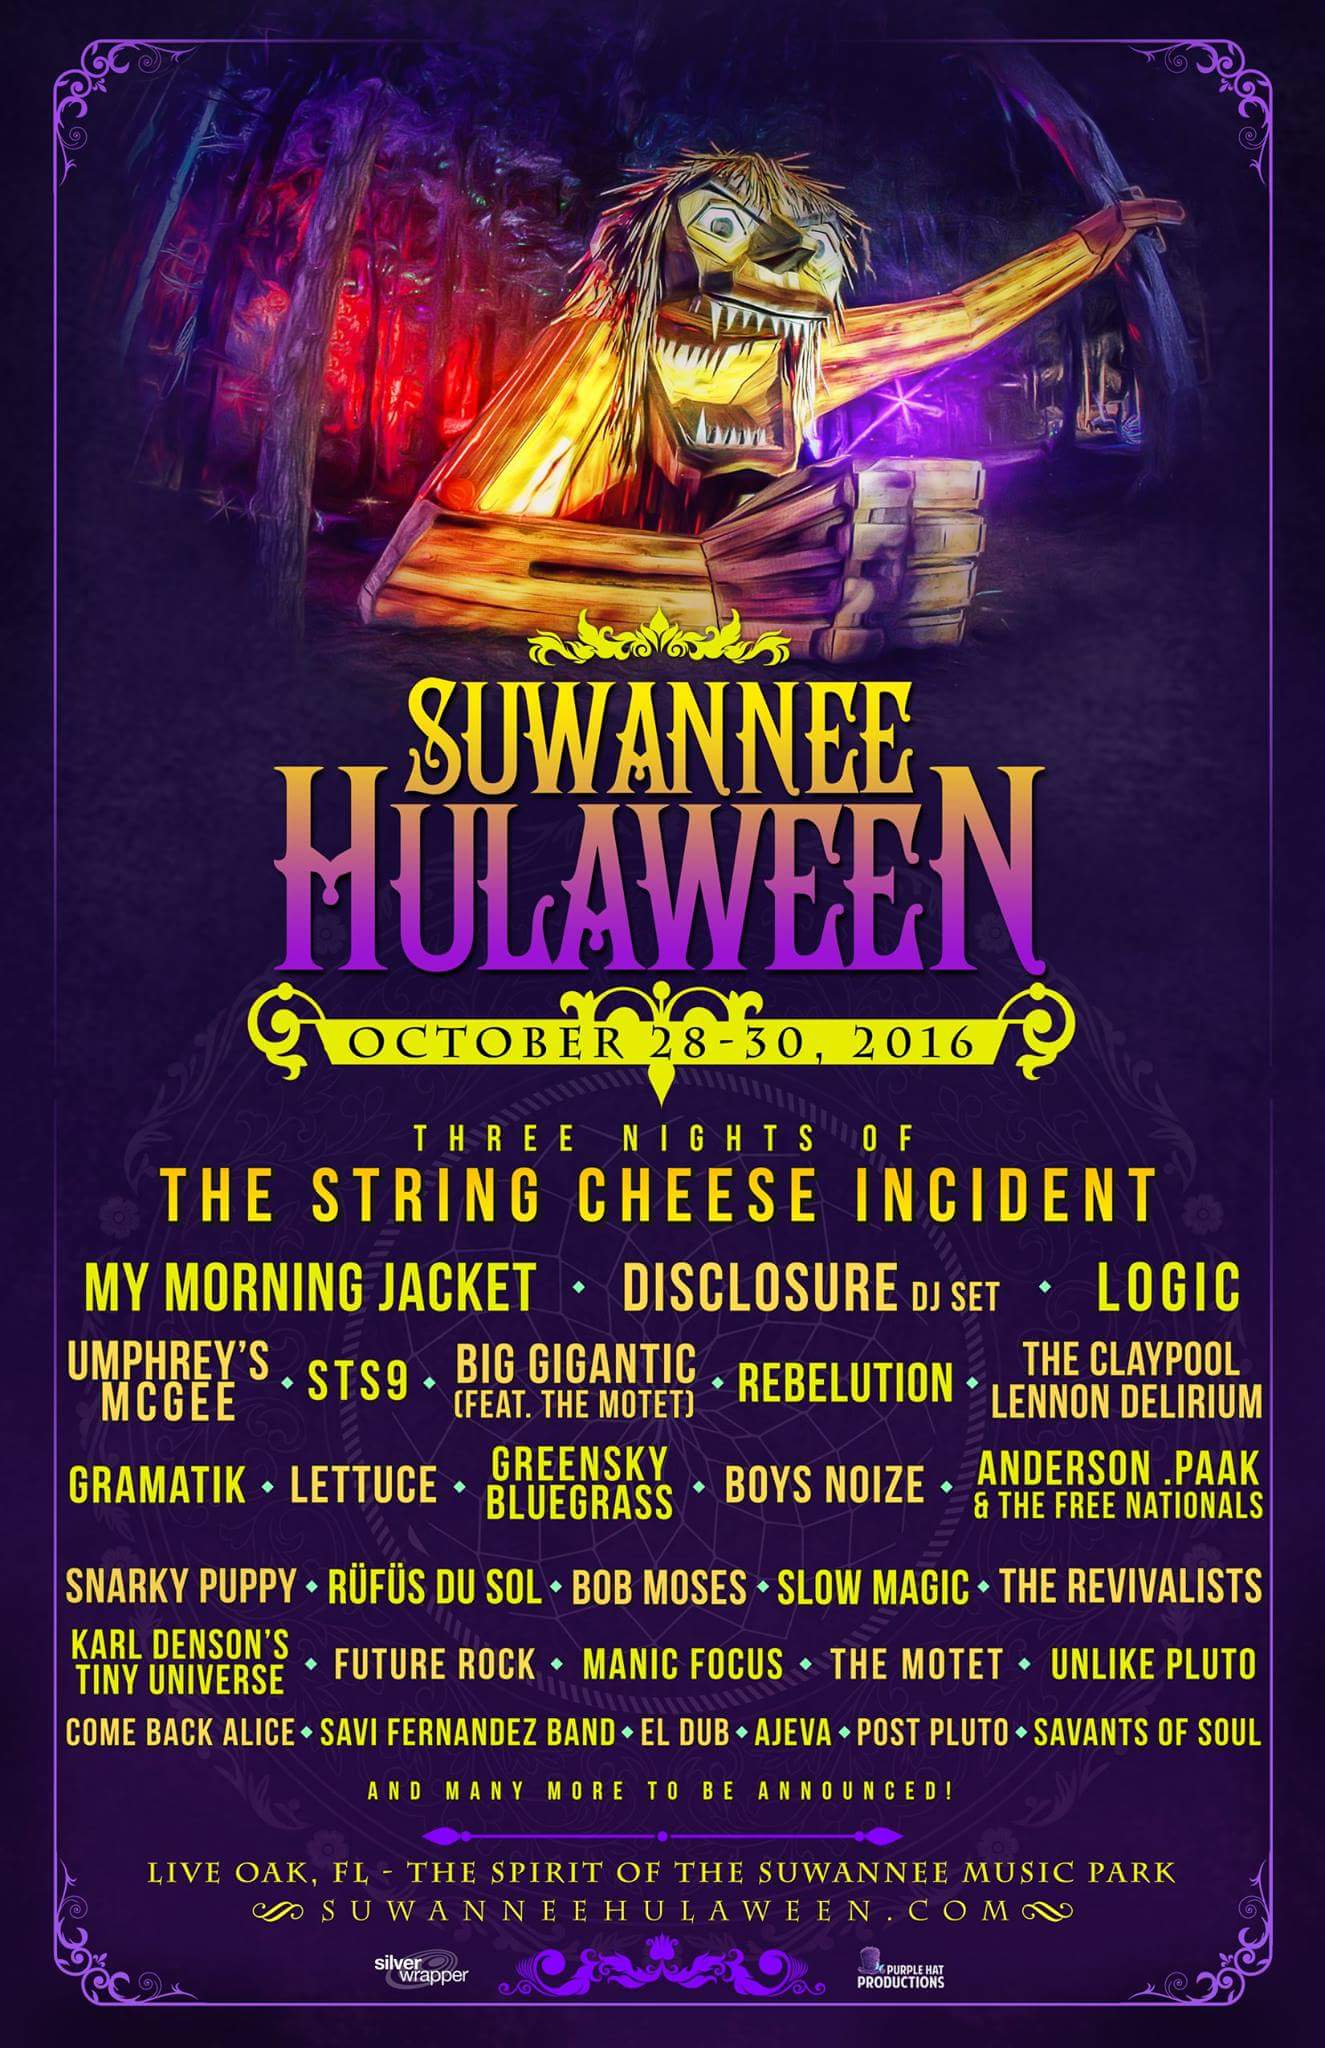 Suwannee Hulaween Sneak Peek Lineup Announced By The Wavs